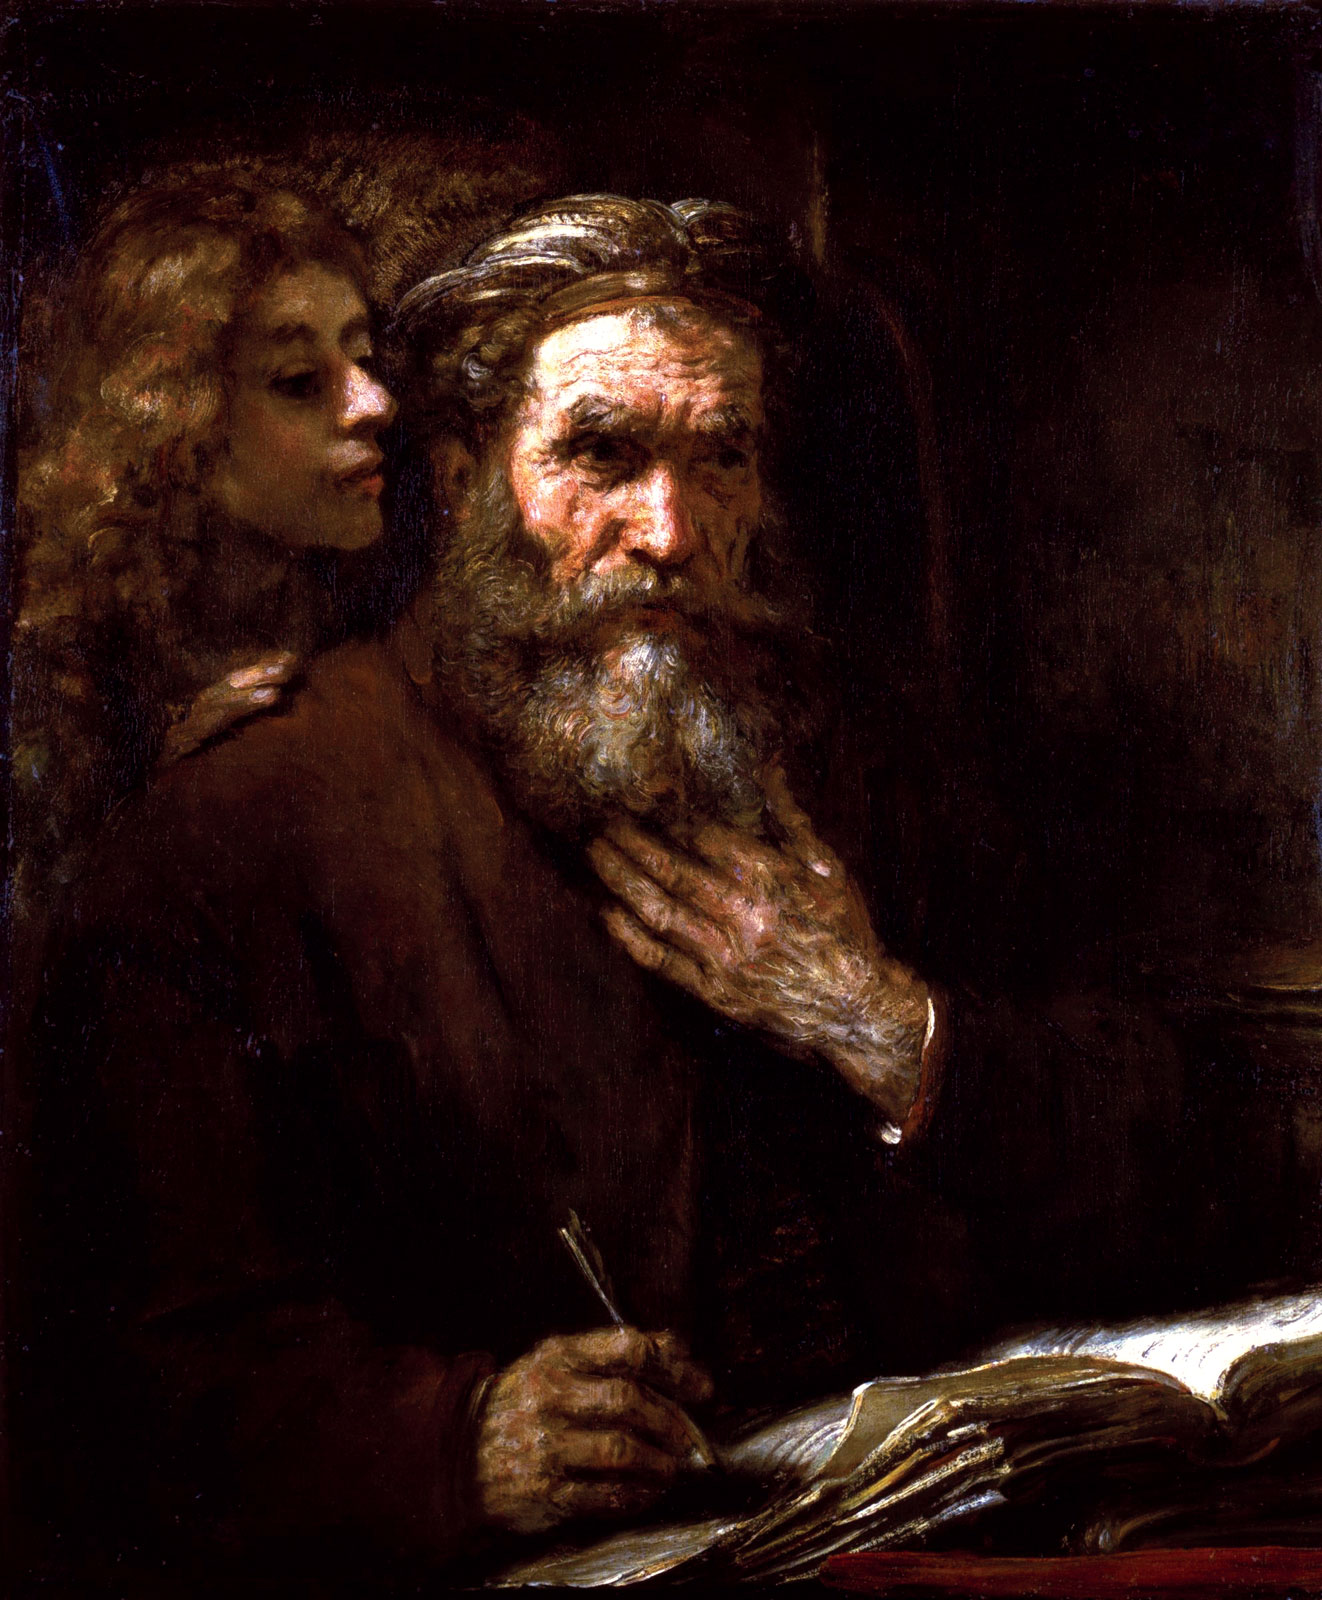 Рембрандт Харменс ван Рейн. "Евангелист Матфей и ангел". 1661.